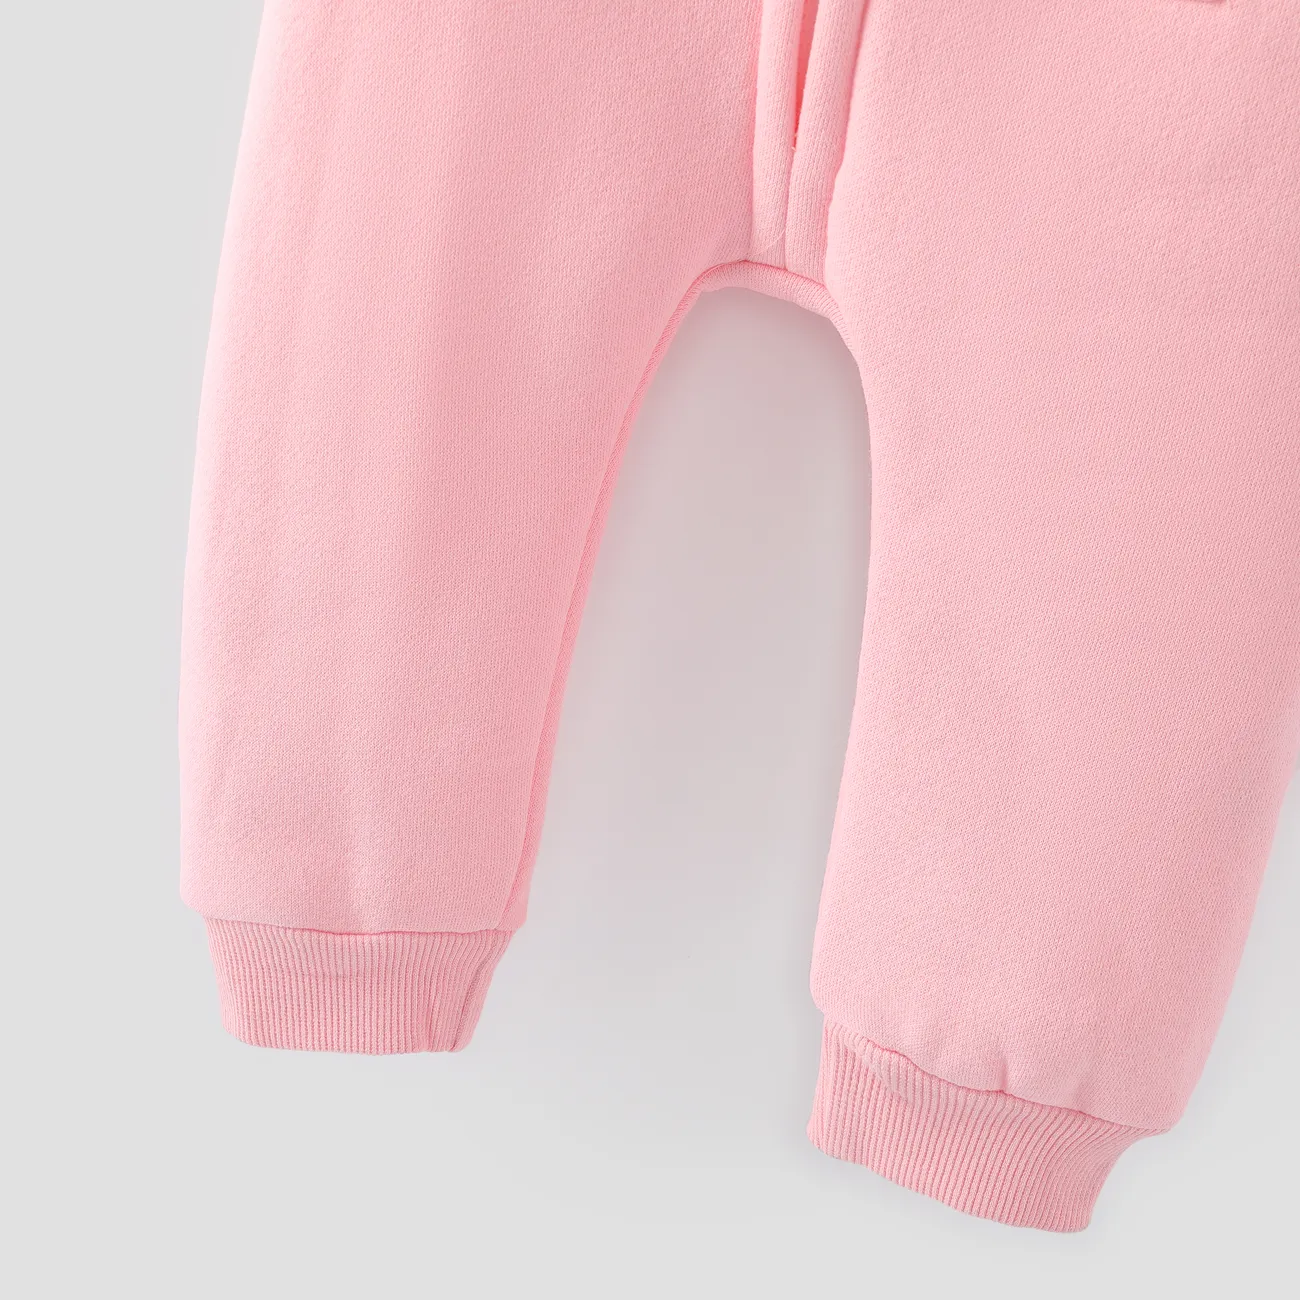 Baby Boy/Girl Cloud Design Thermal Fleece Lined Hooded Zipper Jumpsuit Pink big image 1